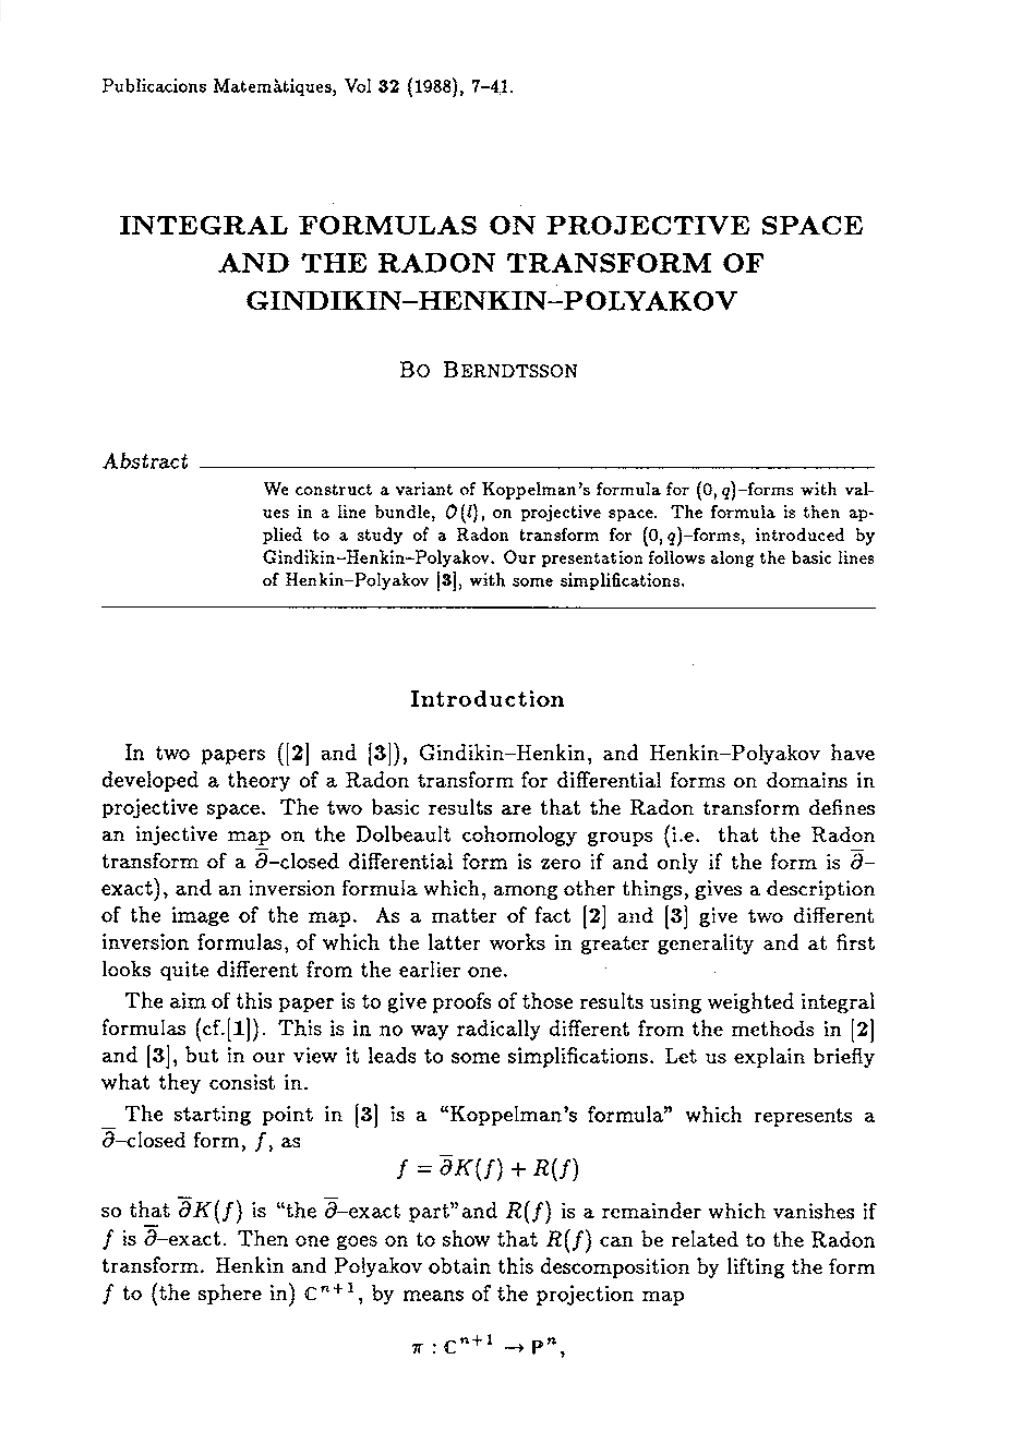 Integral Formulas on Projective Space and the Radon Transform of Gindikin-Henkin-Polyakov